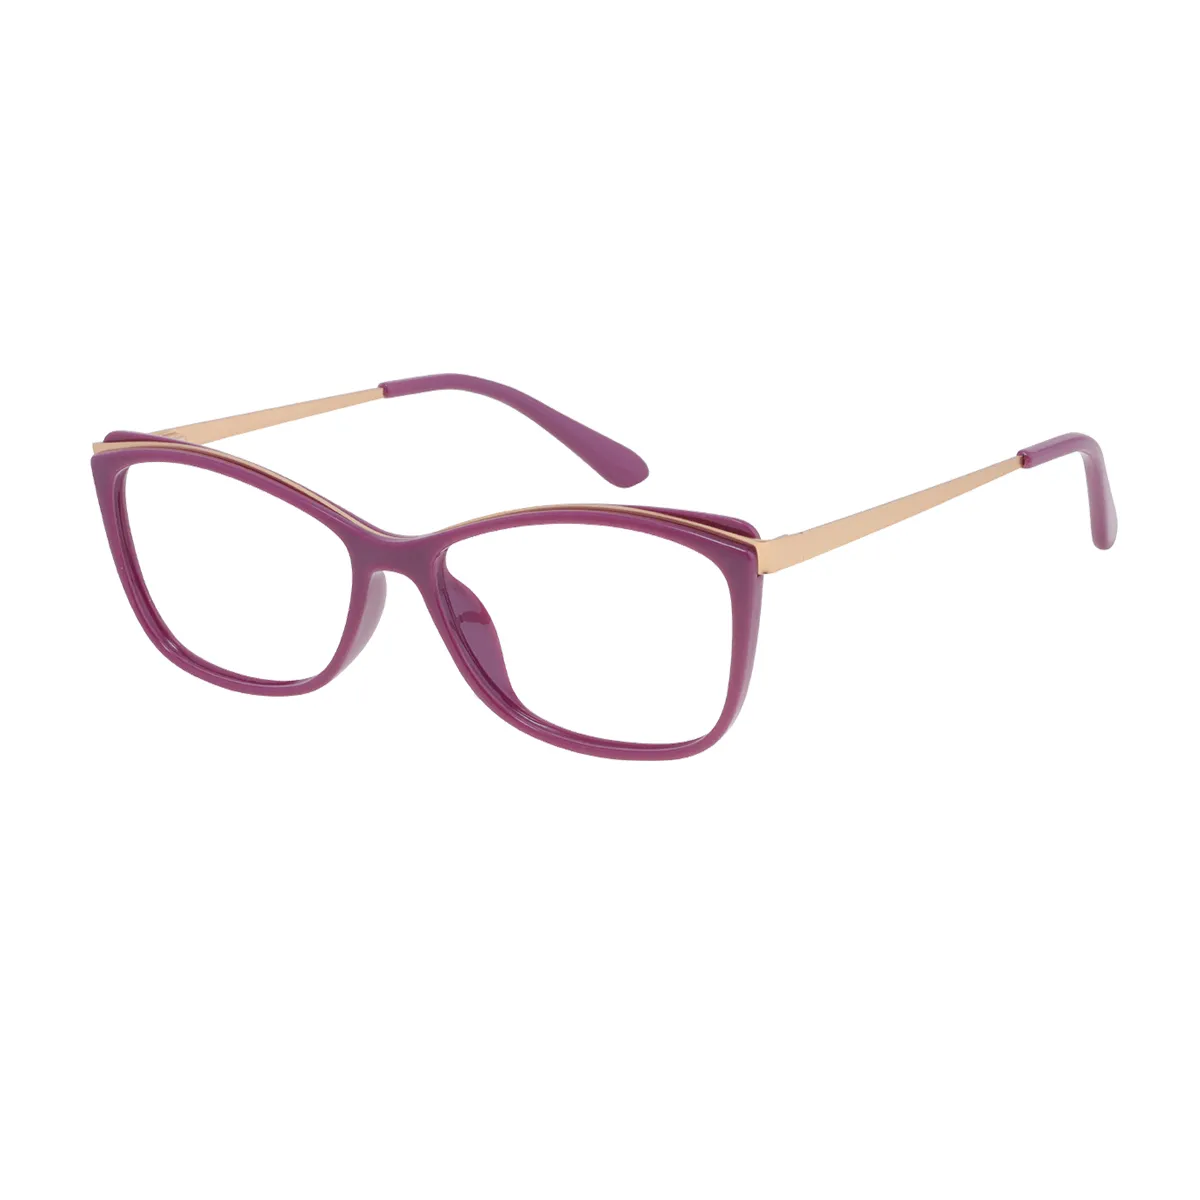 Avice - Cat-eye Purple Glasses for Women